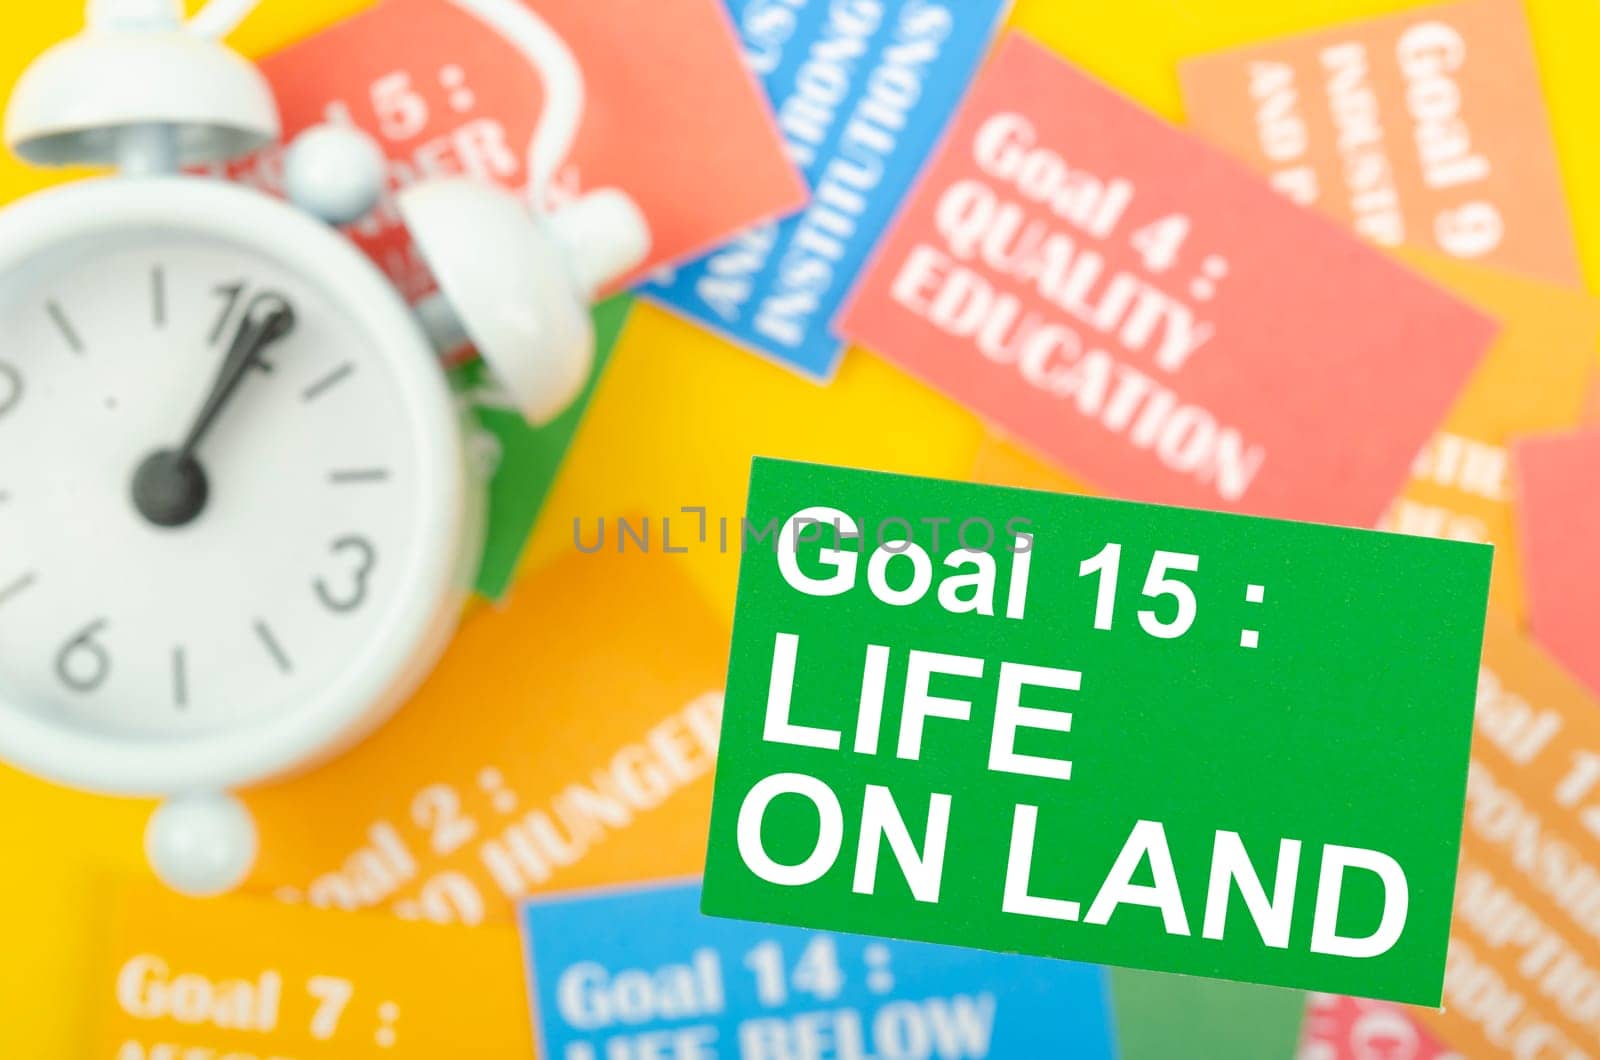 The Goal 15 : Life on Land. The SDGs 17 development goals environment. Environment Development concepts. by Gamjai